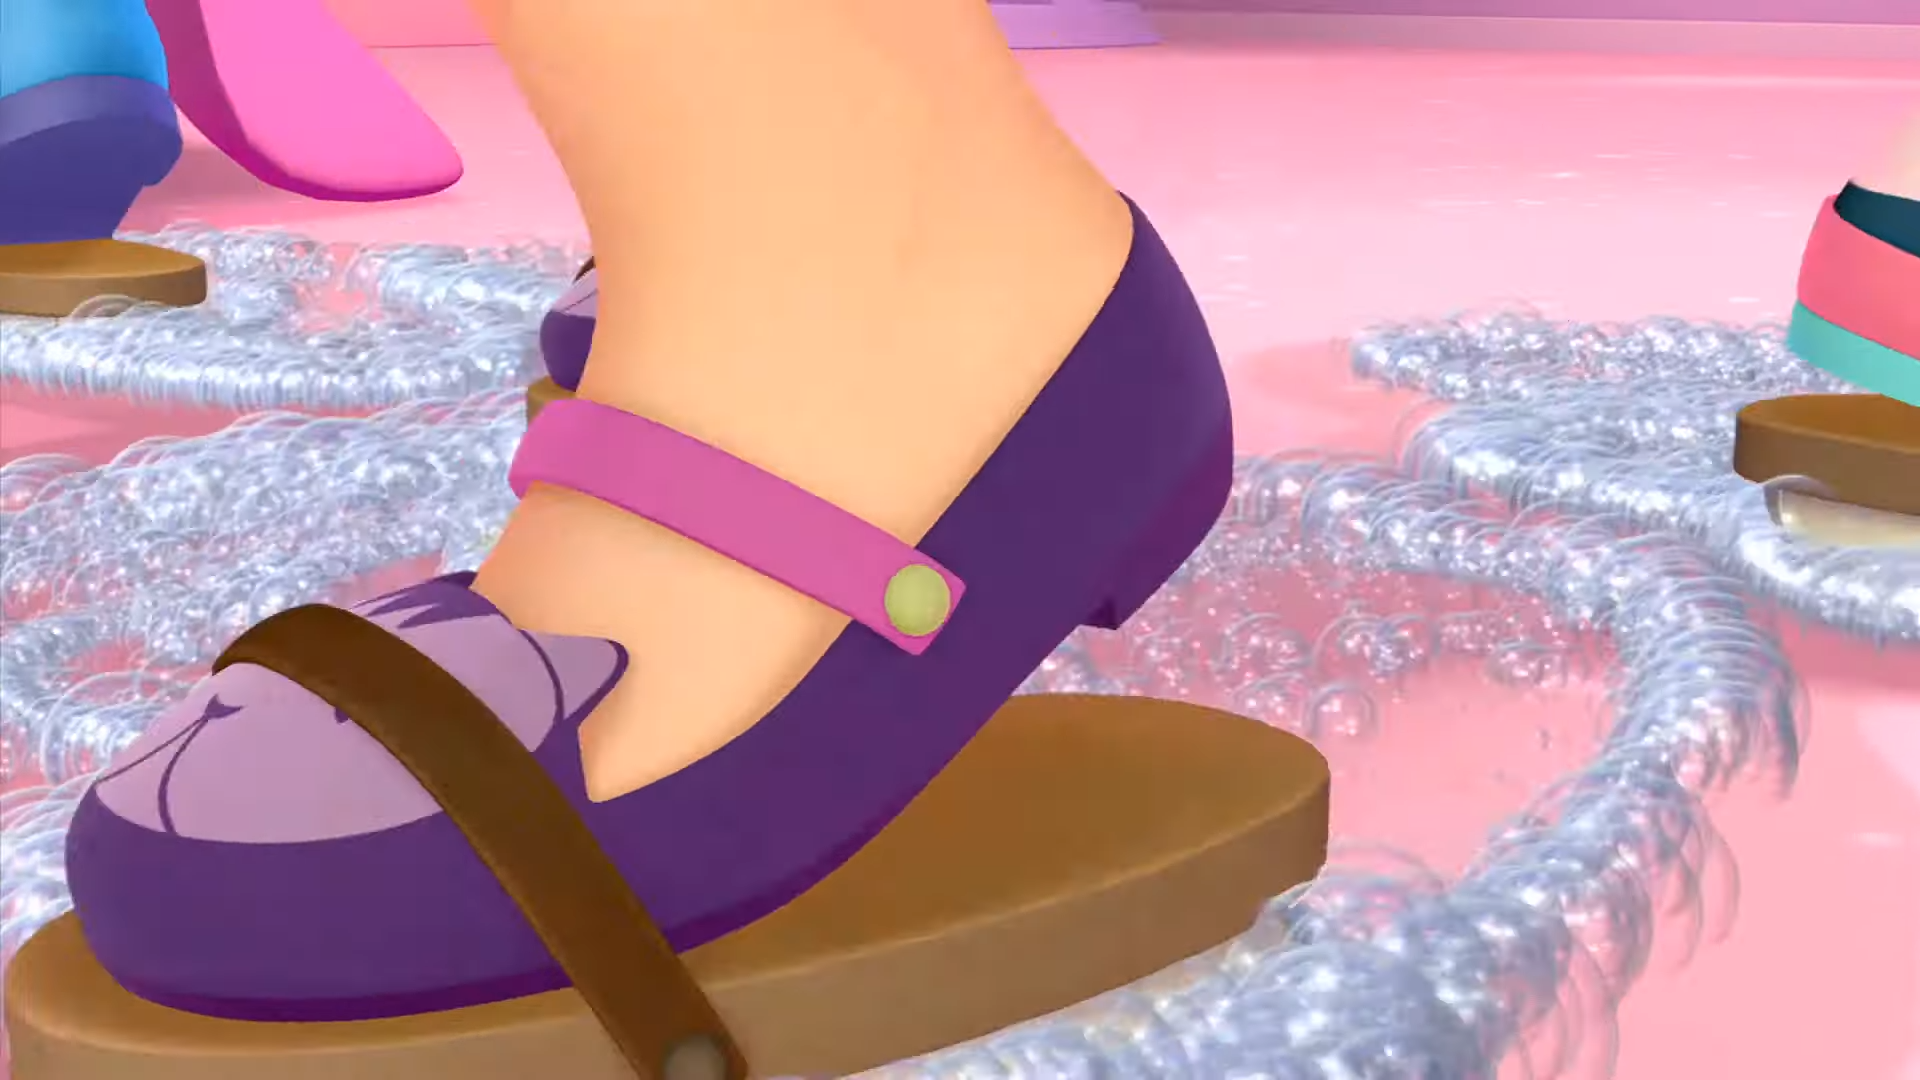 a cartoon of a foot wearing purple shoes